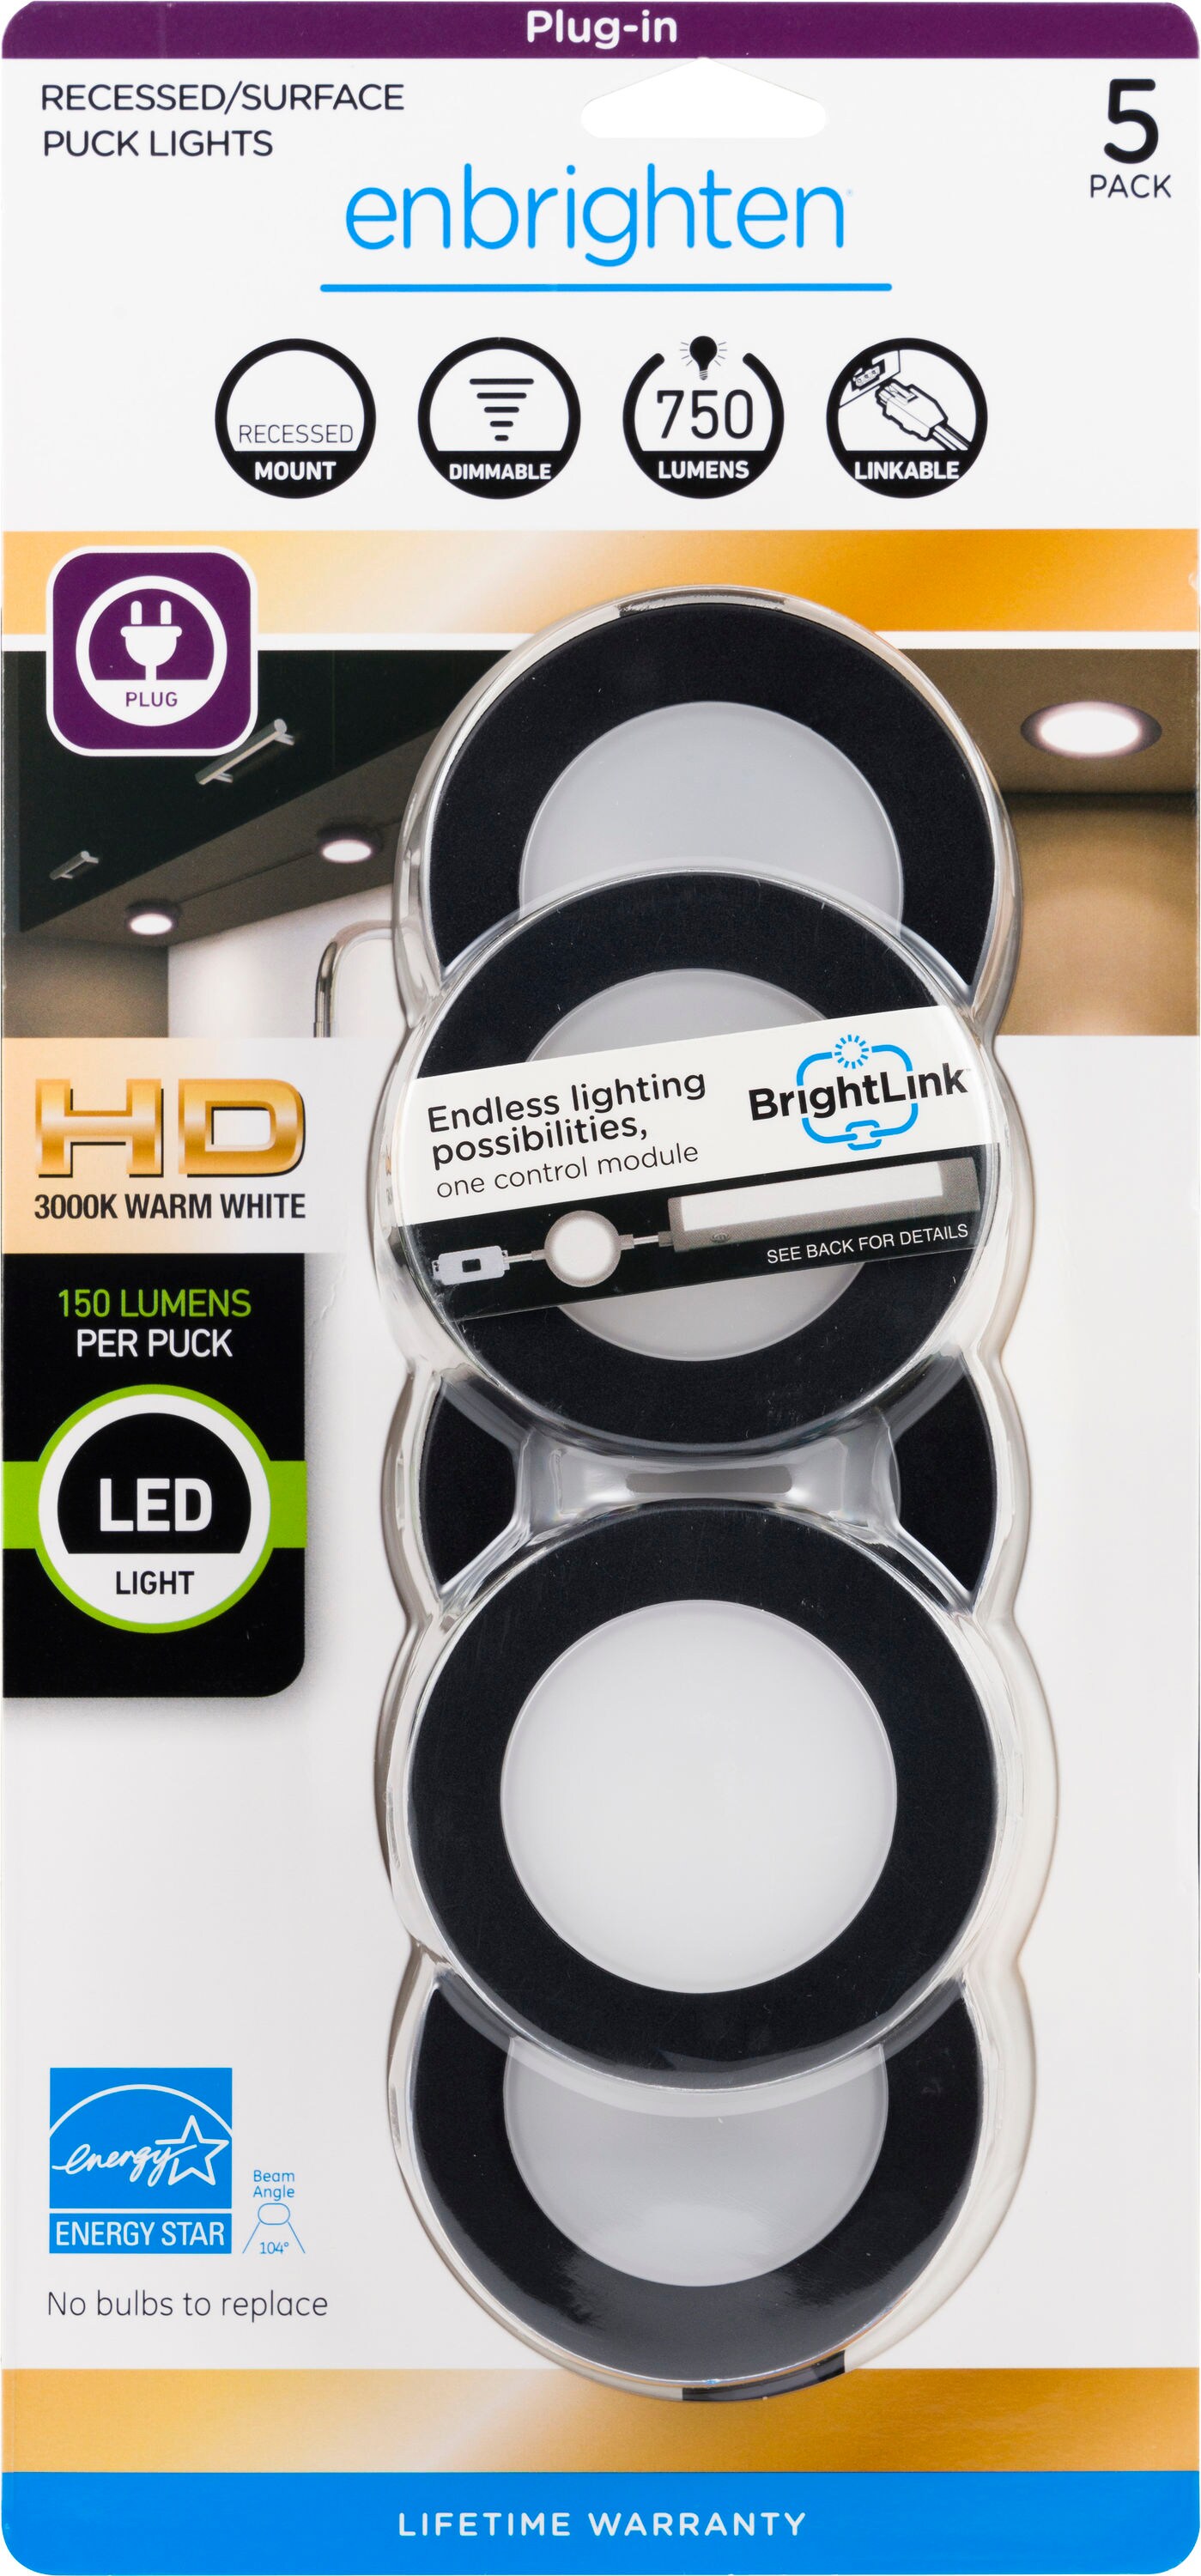 Enbrighten Recessed Surface Mount Puck Lights 5 Pack Plug in 44974 for sale online 